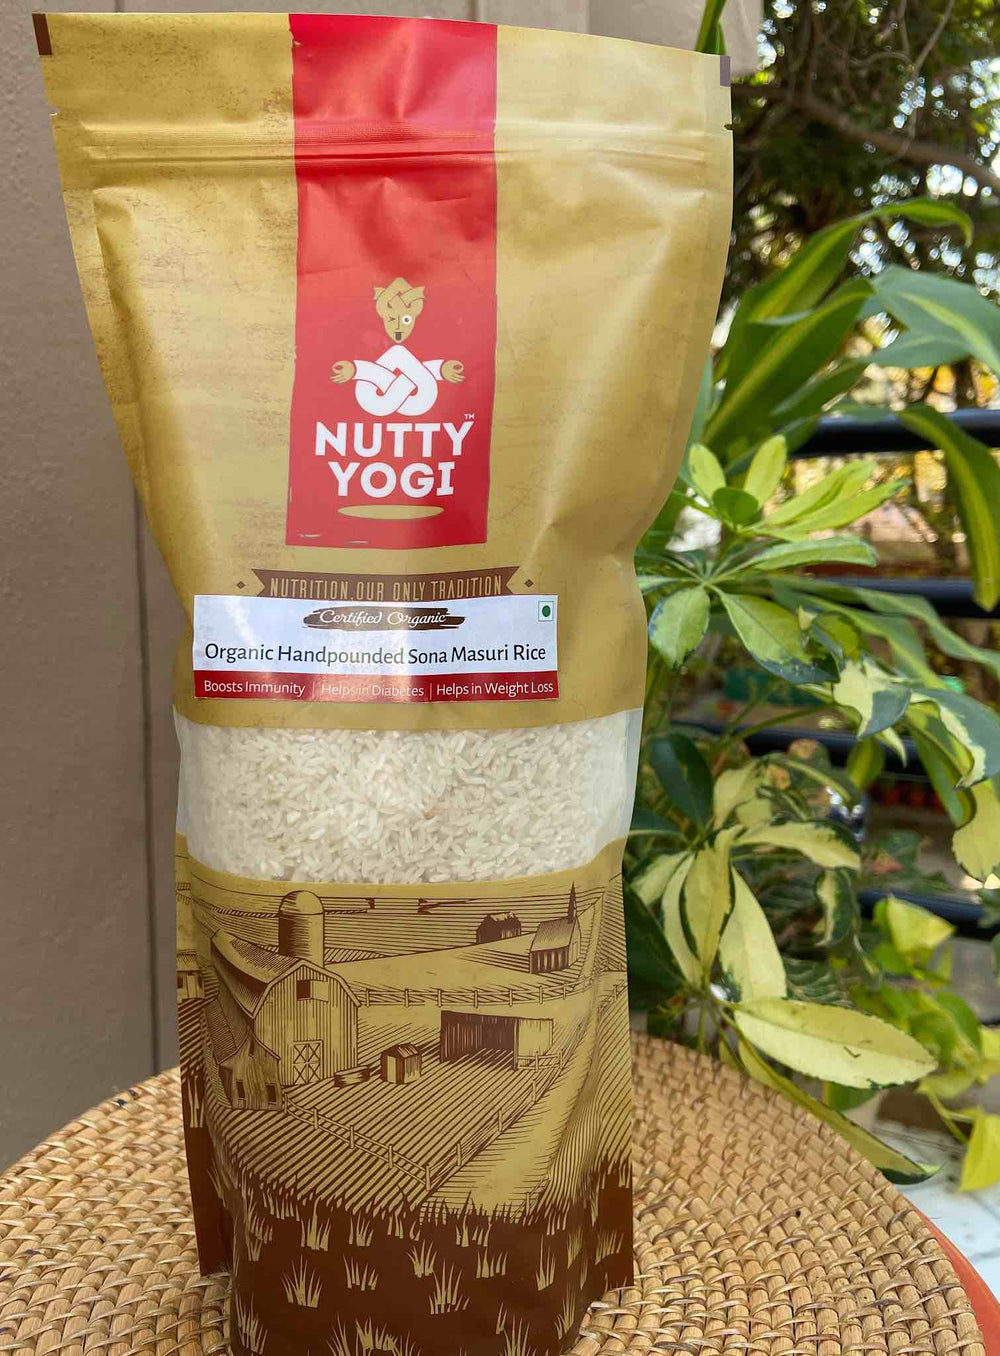 Nutty Yogi Organic Hand-pounded Sona Masoori Rice (500g)